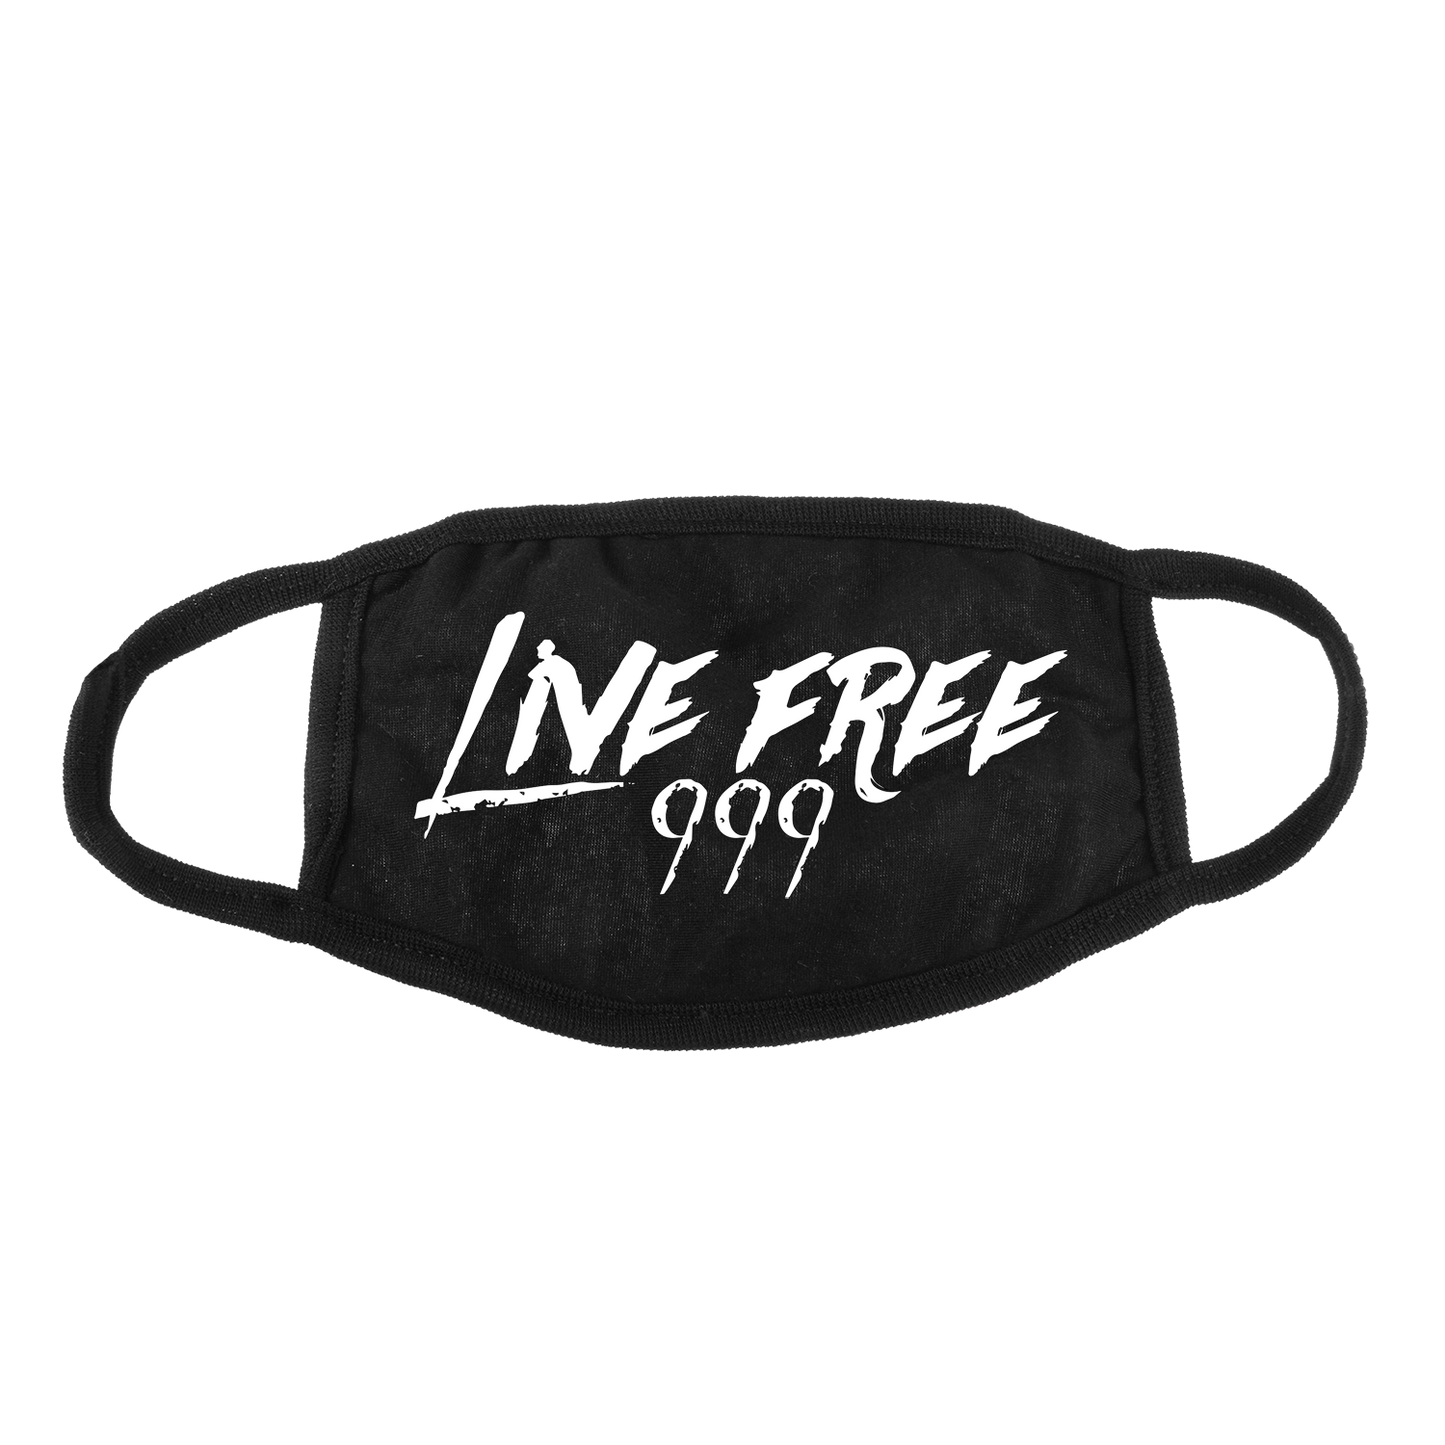 Live Free 999 Mask